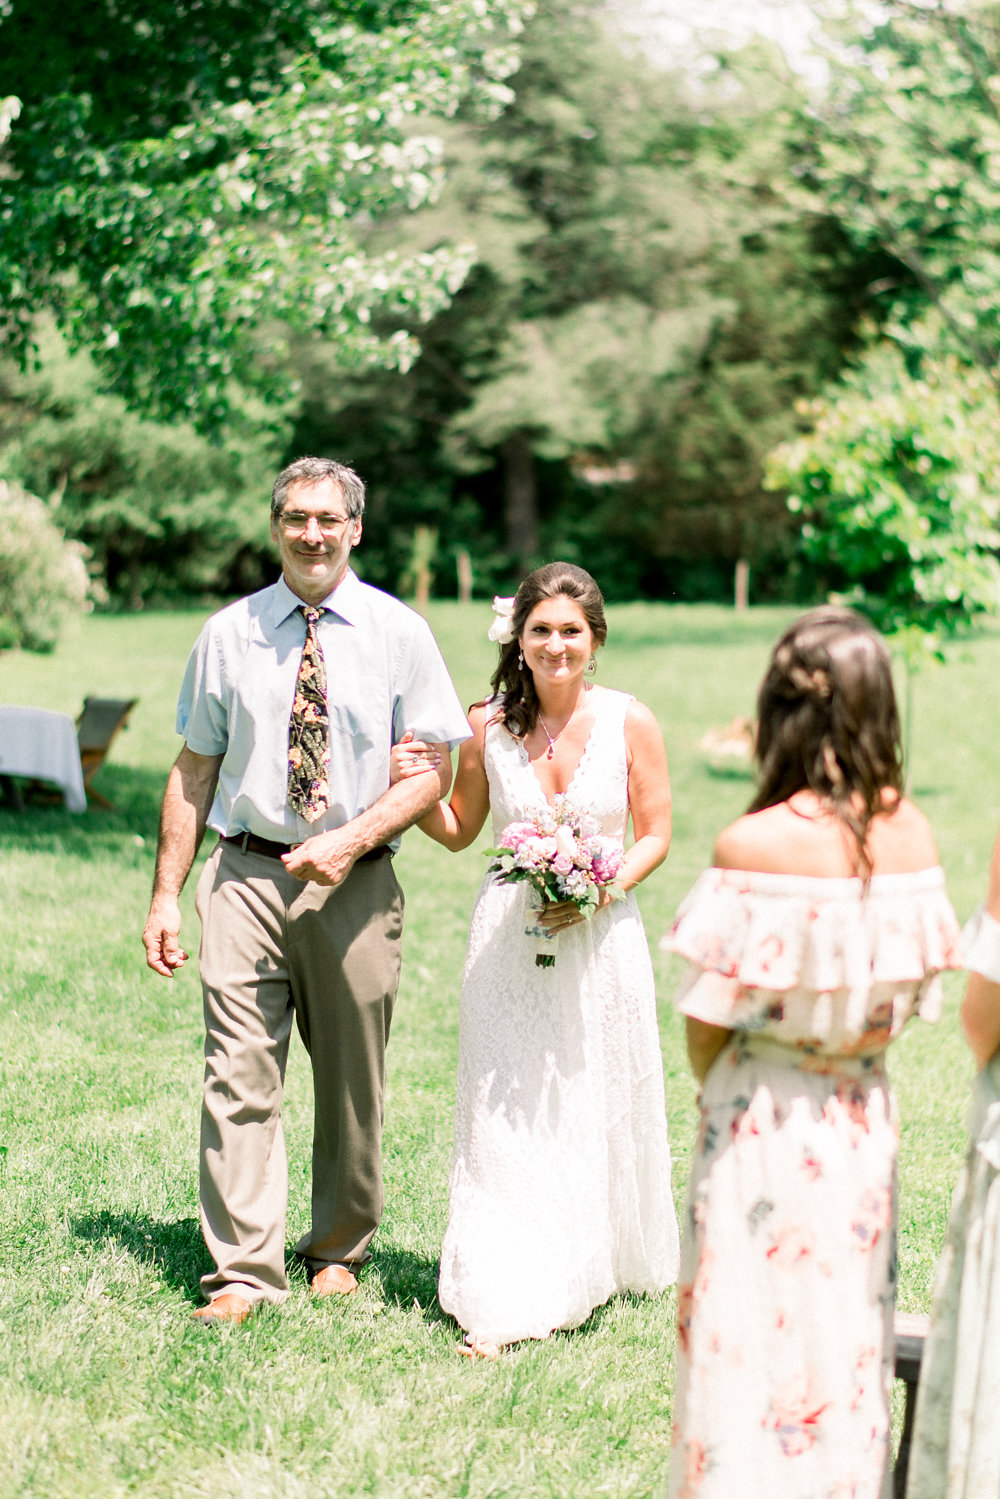 An Intimate Backyard Wedding - The Overwhelmed Bride Wedding Blog